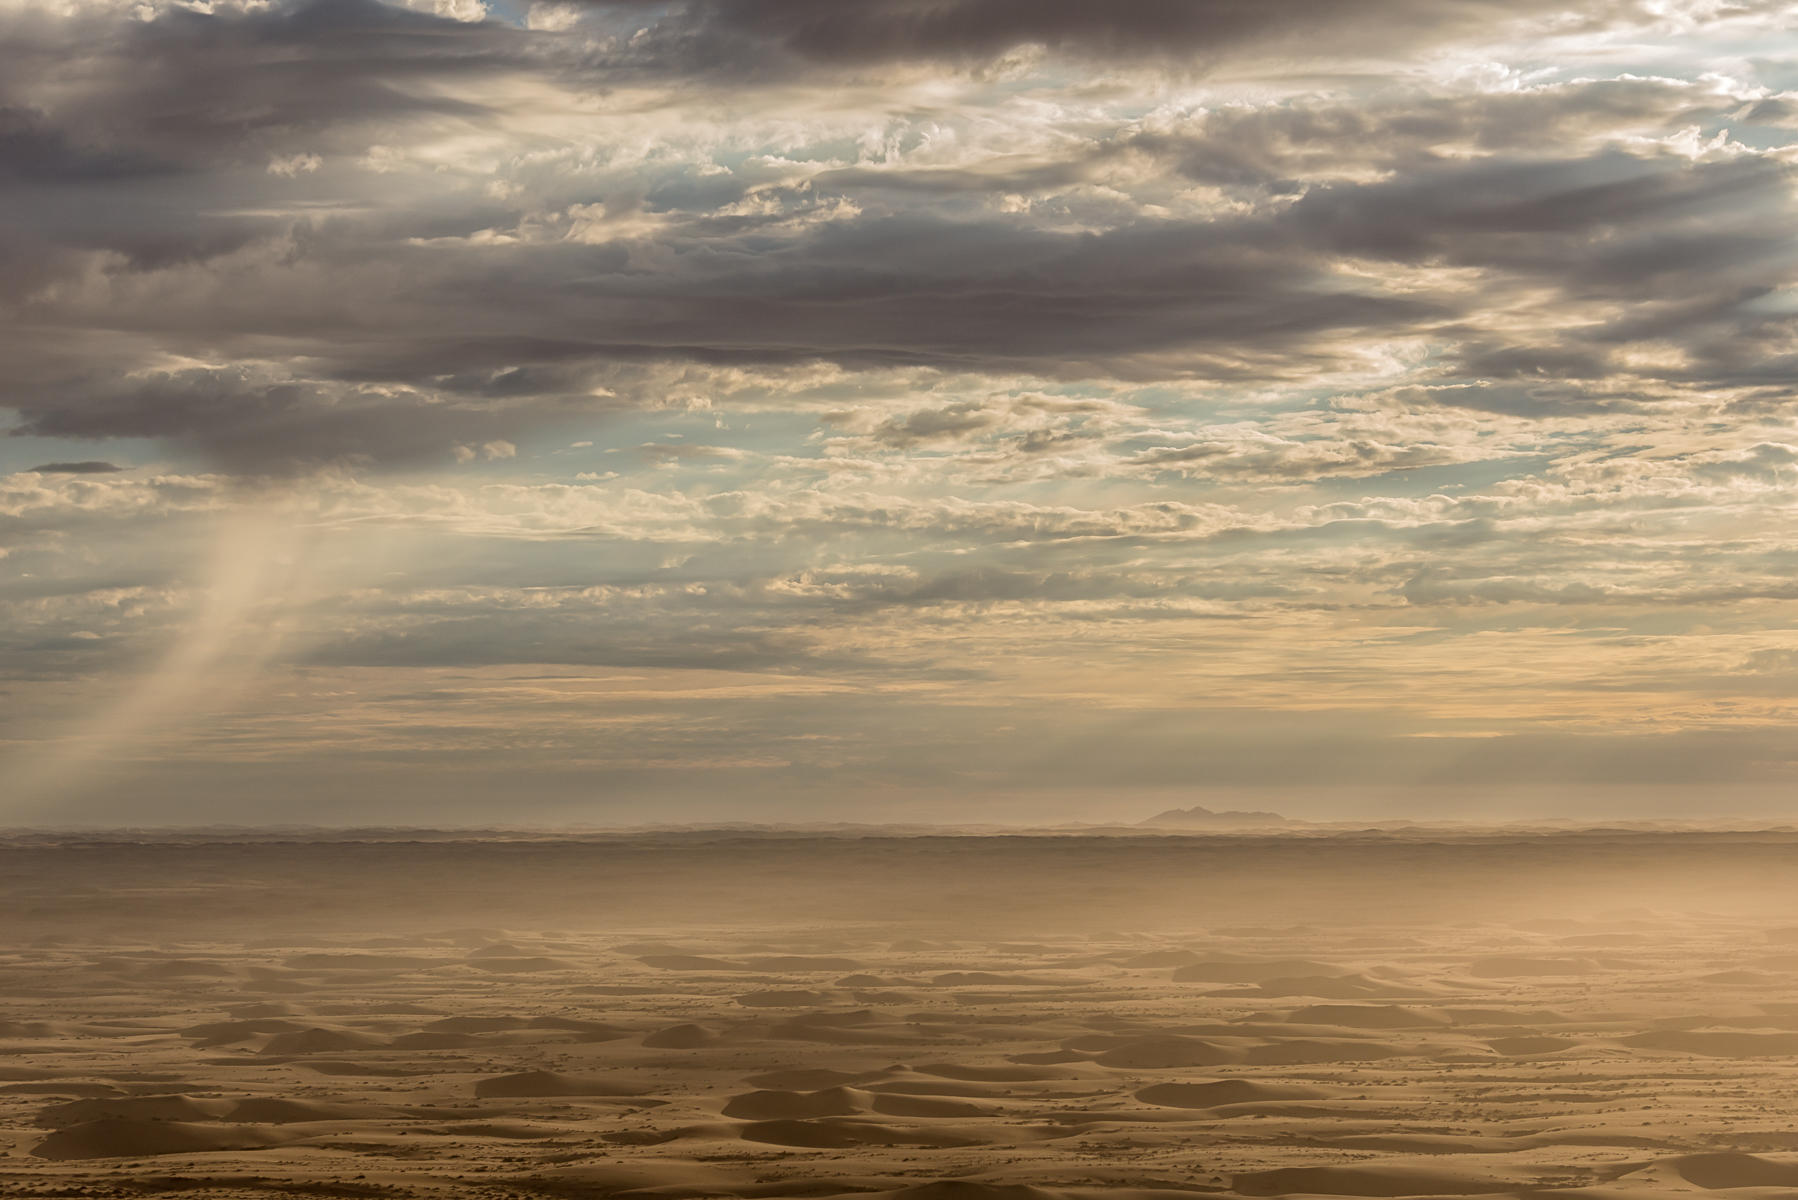 Virga Rain : Namibia, The Land of Dunes : ELIZABETH SANJUAN PHOTOGRAPHY